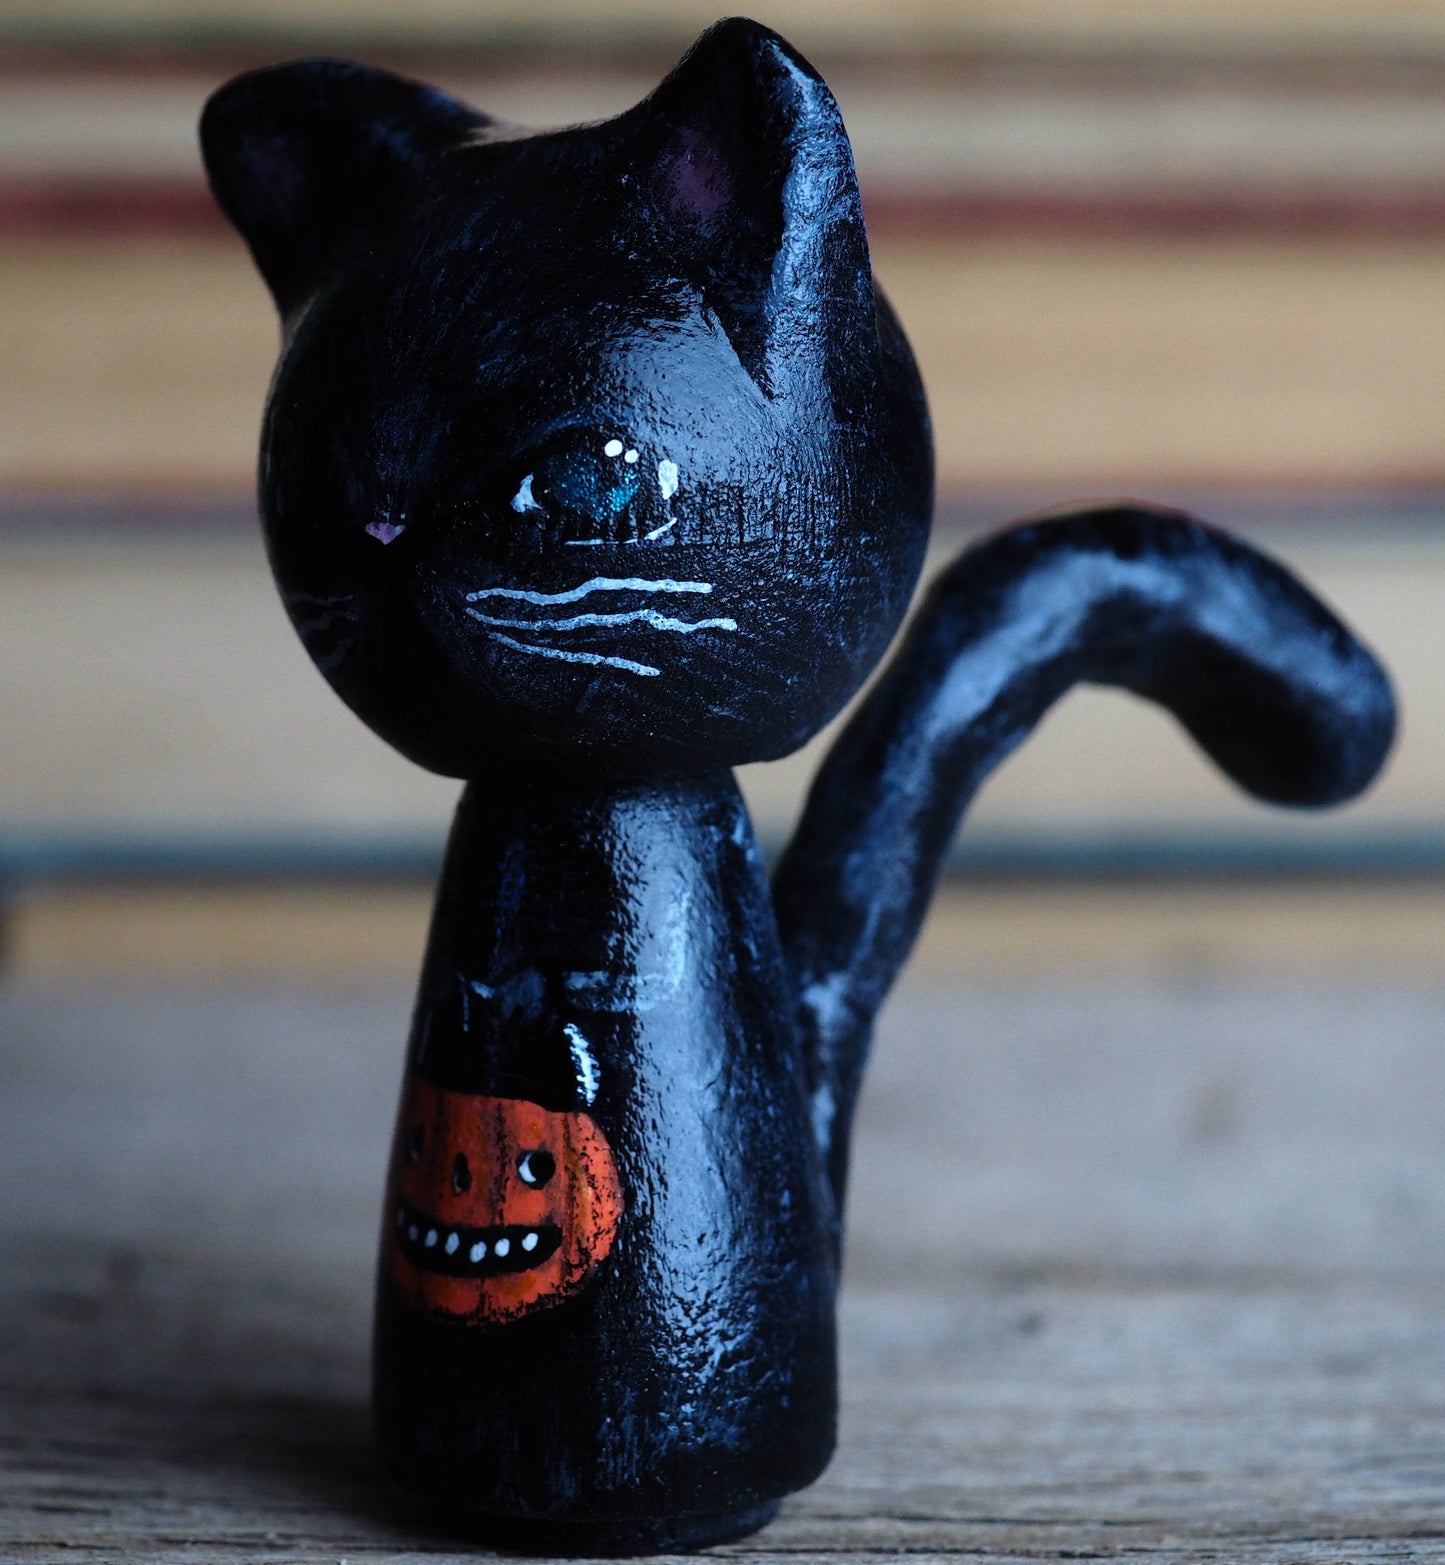 Danita original wooden kokeshi art doll. Home decor Halloween black cat mini figurine, perfect to decorate desks and shelves. Collectible items from Danita!